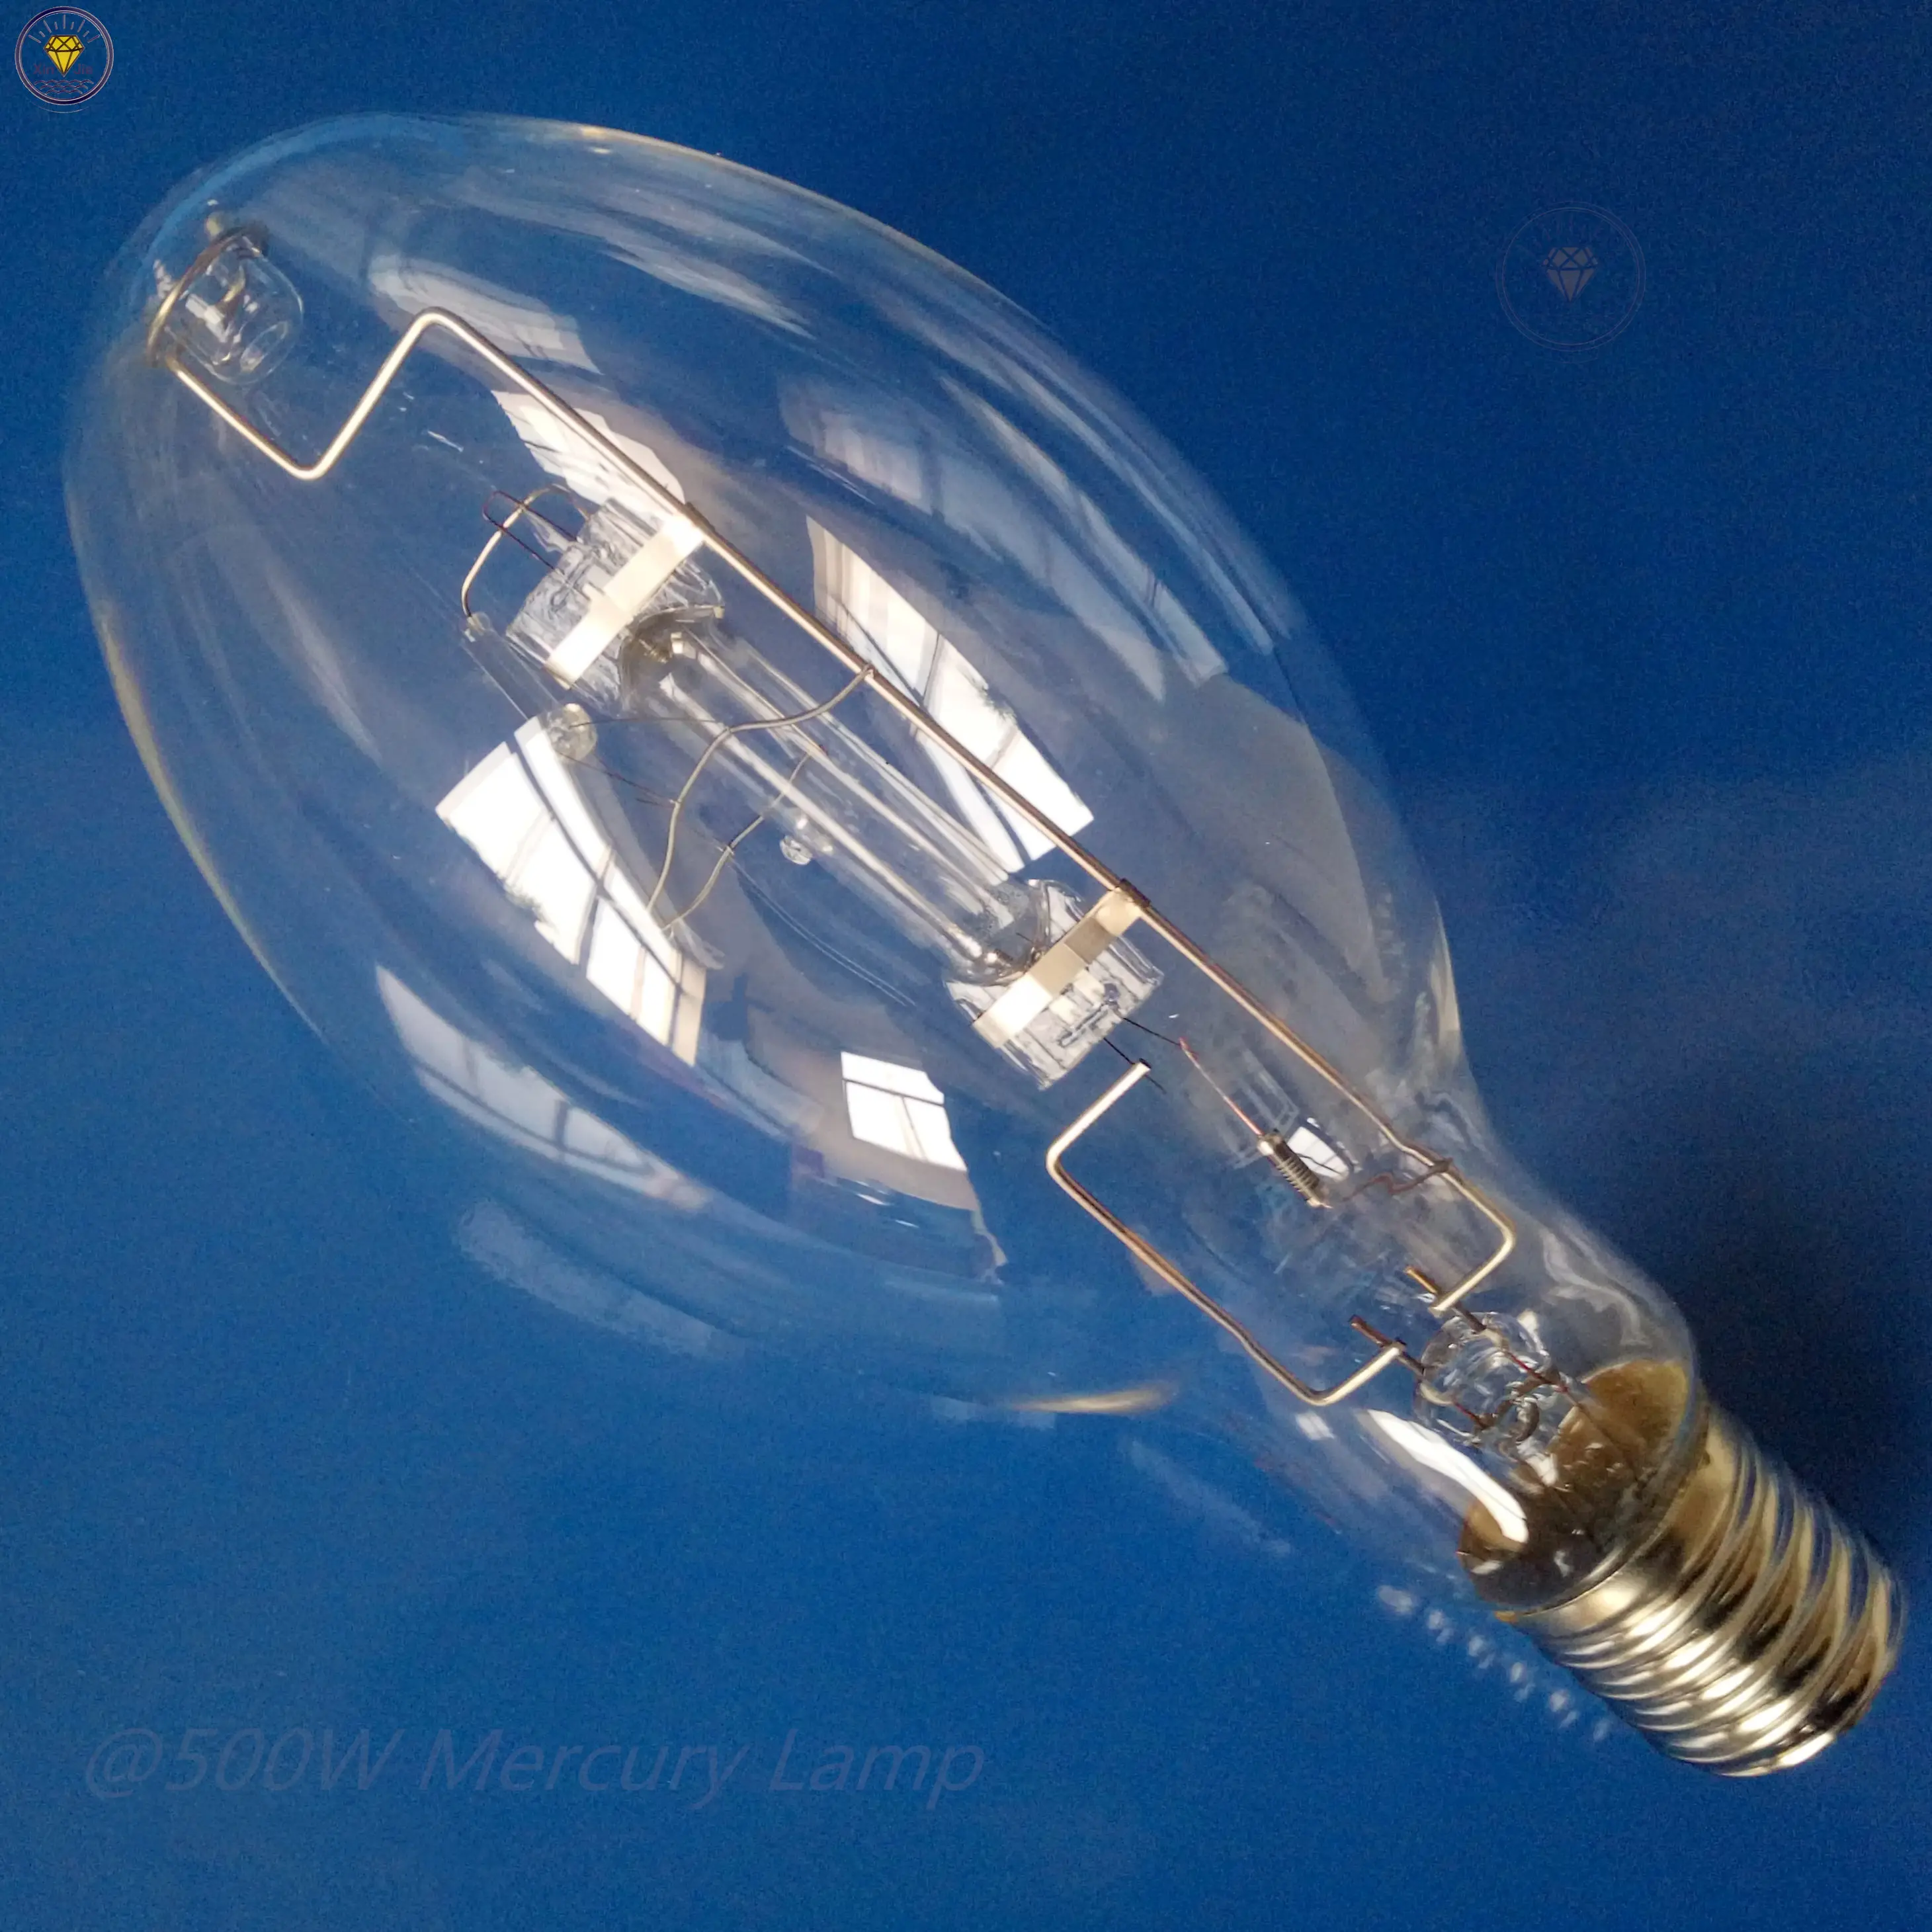 400w mercury vapor lamp HID vapor bulbs ballasted BT shape for enclosed fixtures outdoor lighting arc light (60842527444)